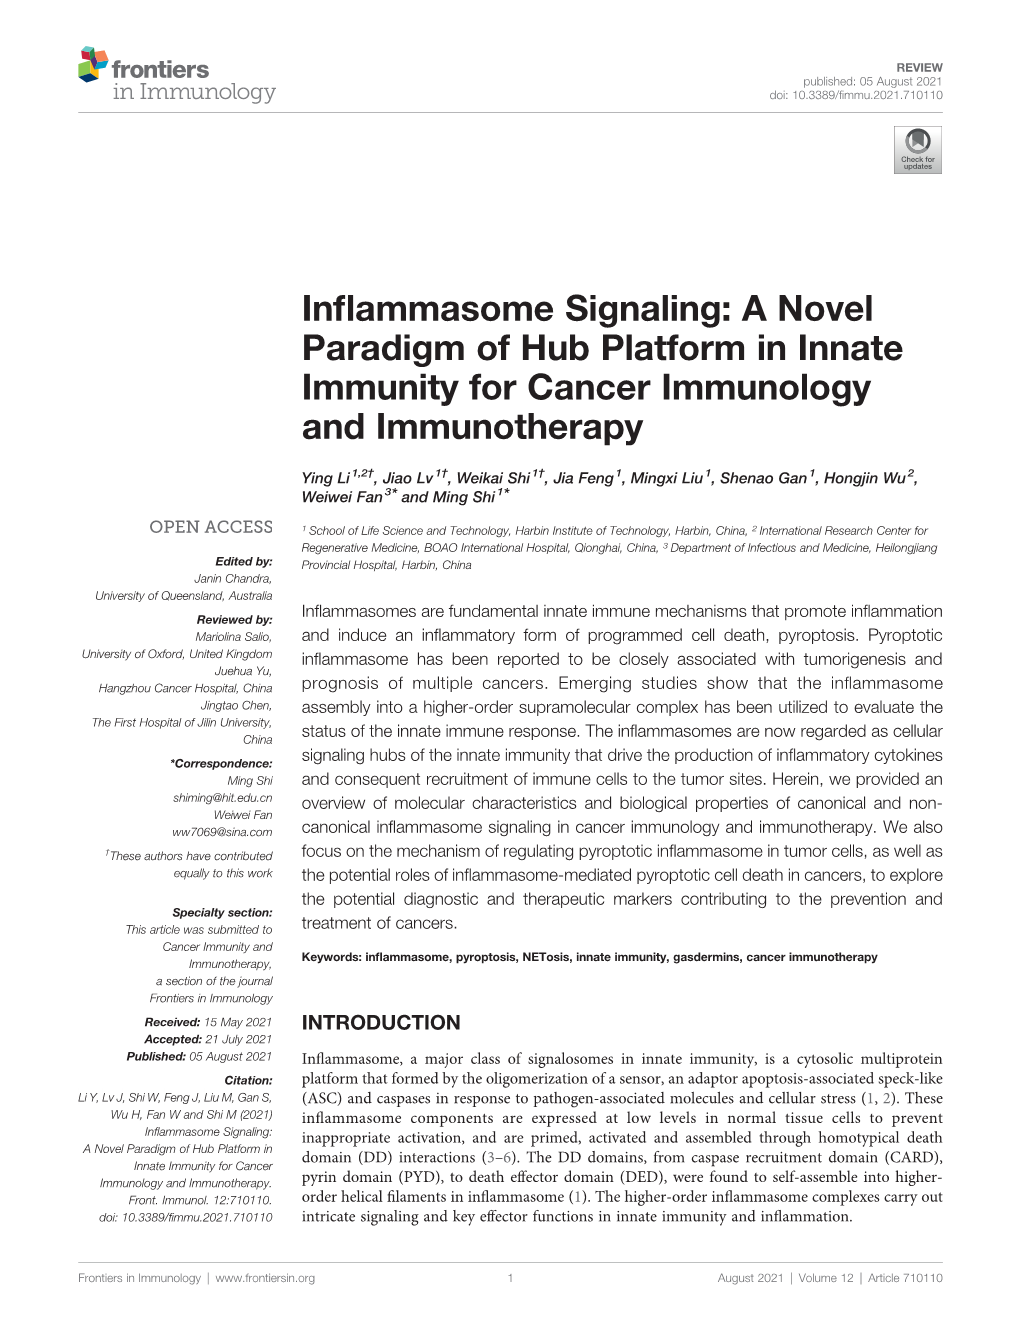 Inflammasome Signaling: a Novel Paradigm of Hub Platform in Innate